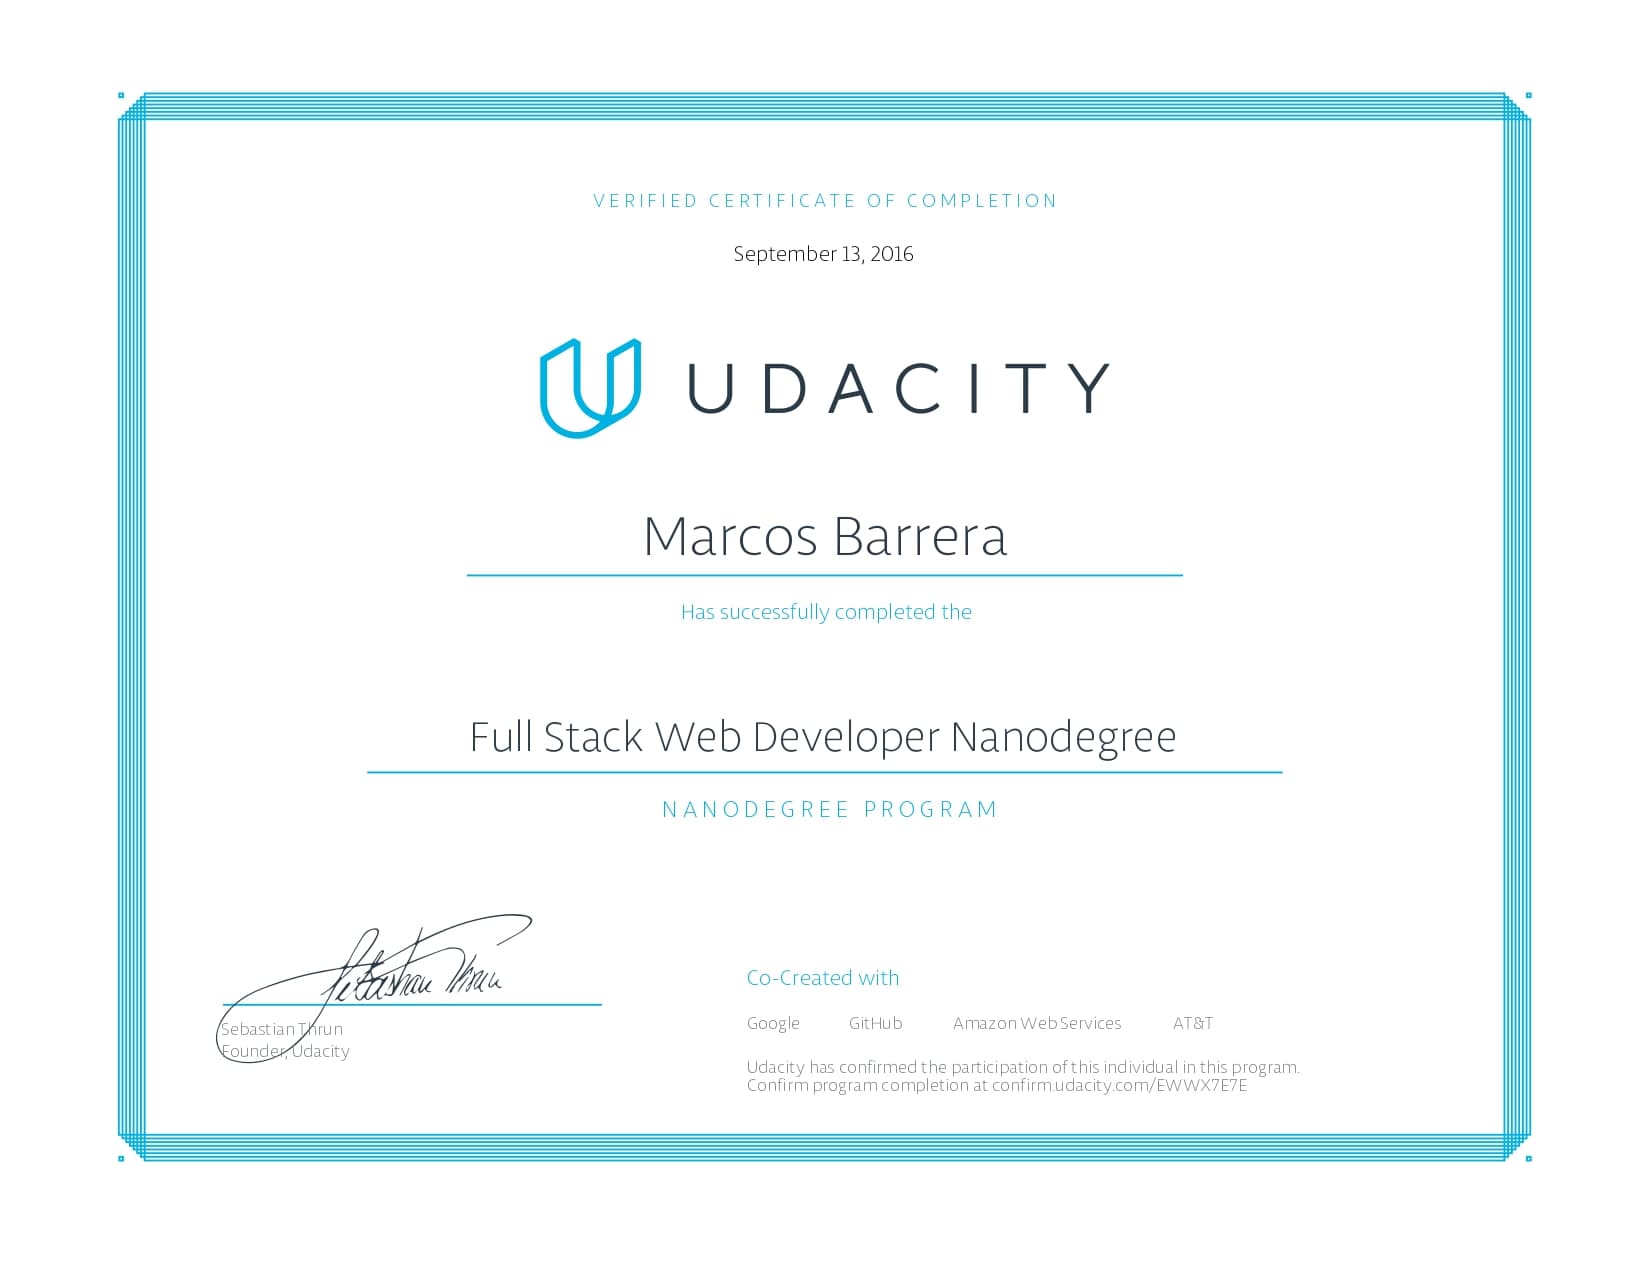 Udacity: Full Stack Web Developer Nanodegree